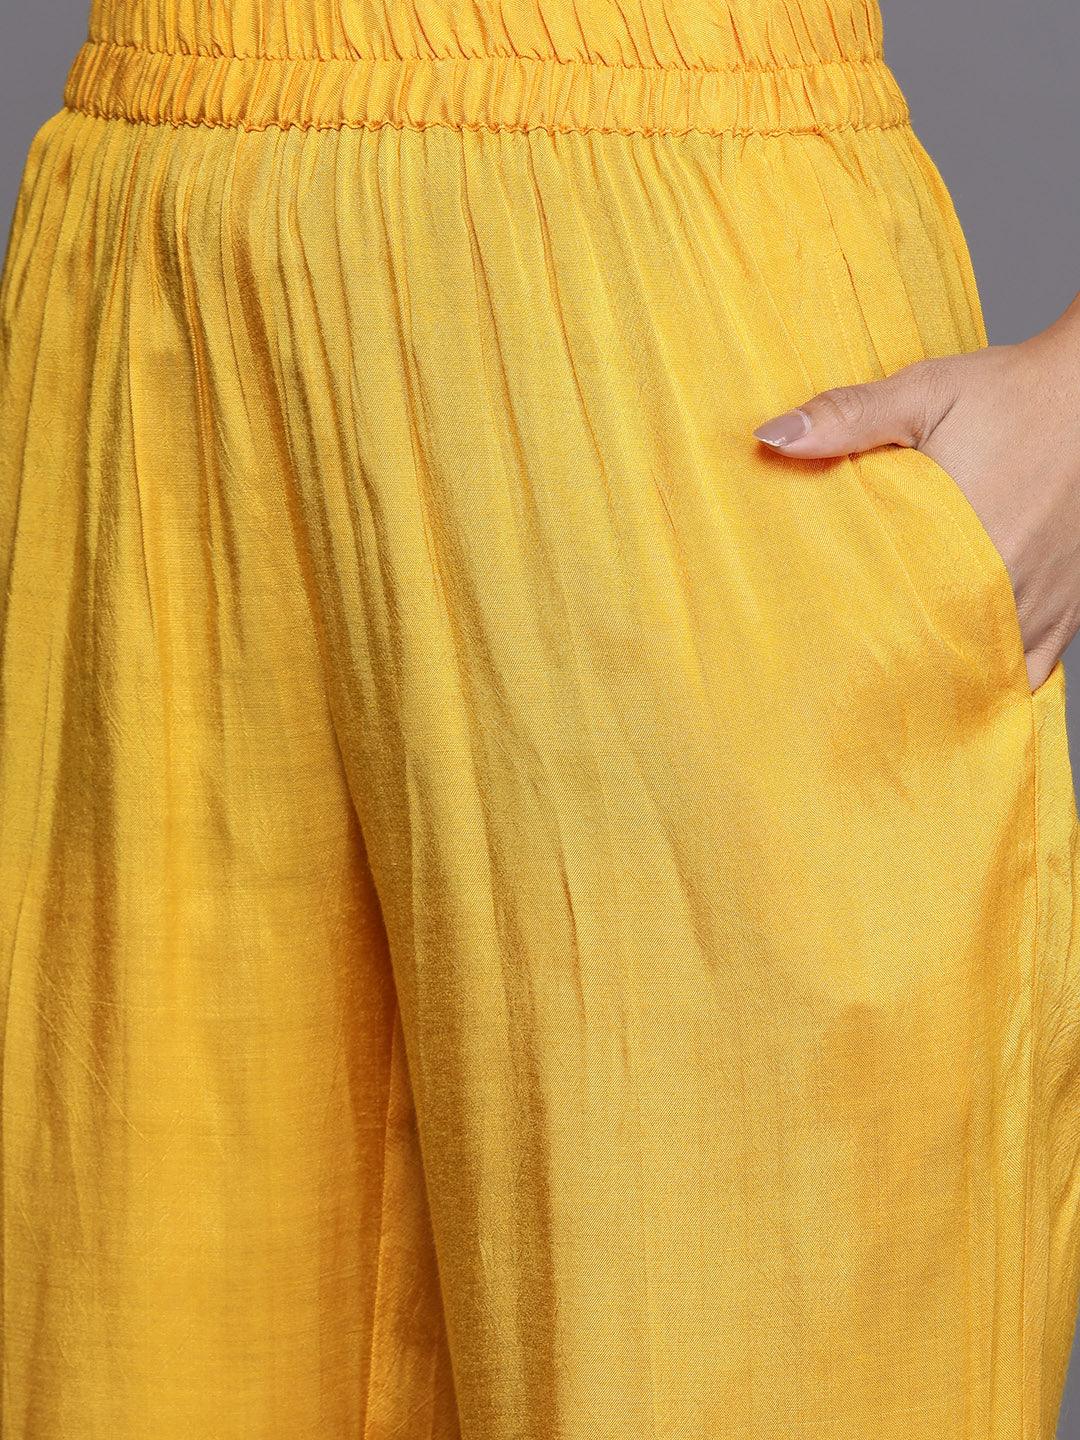 Yellow Self Design Silk Blend Straight Suit Set - Libas